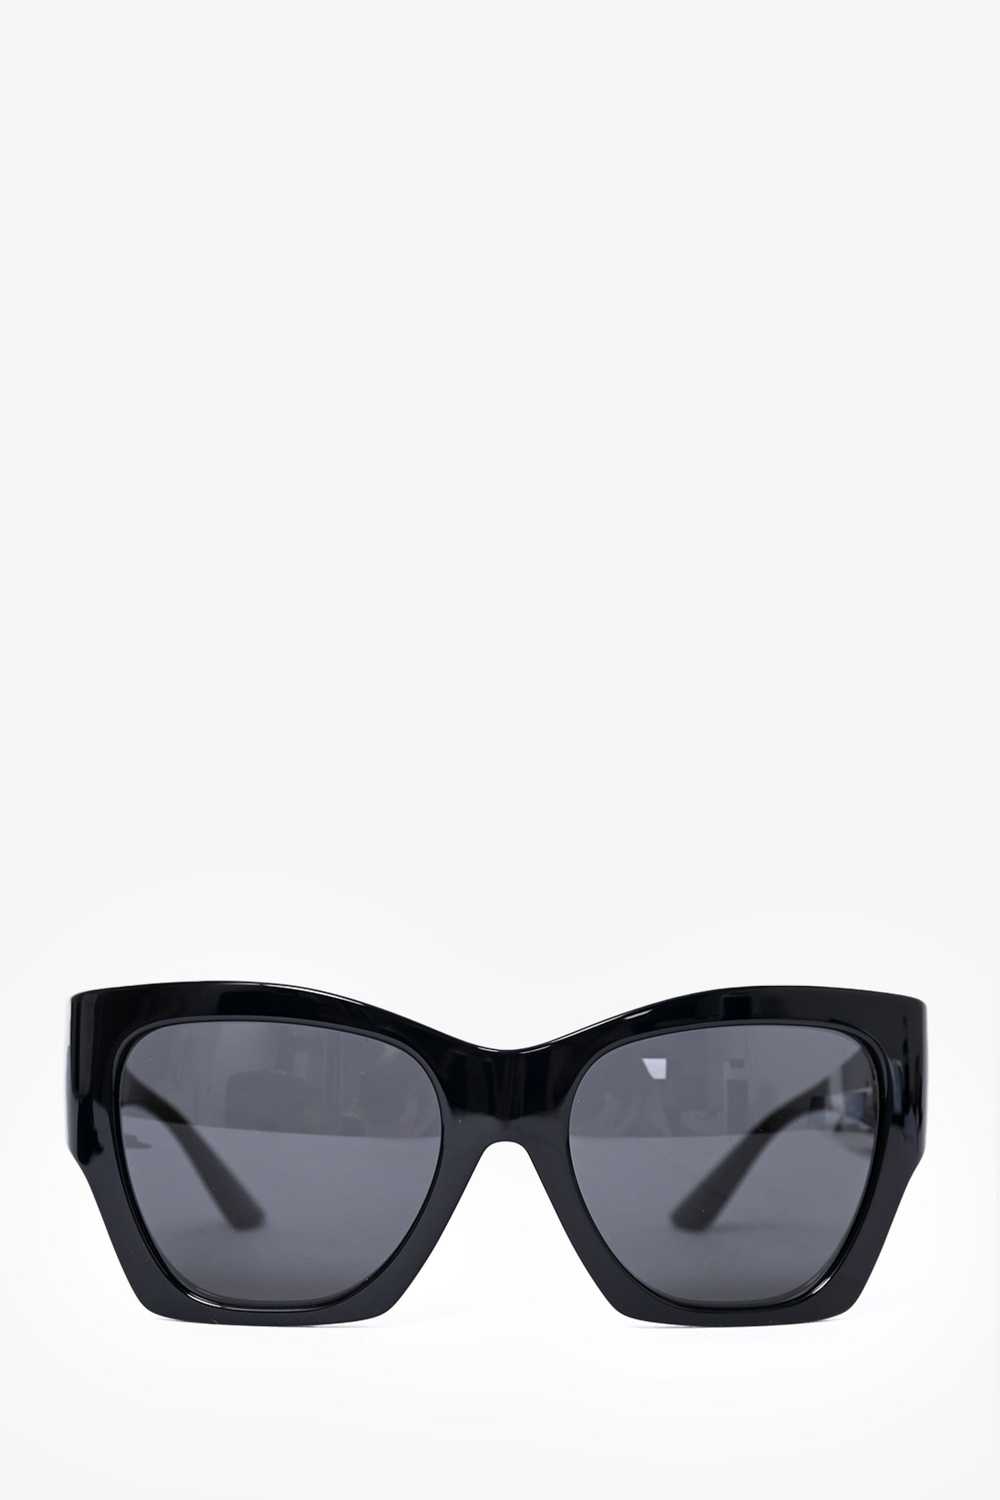 Versace Black Medusa Square Frame Sunglasses - image 1